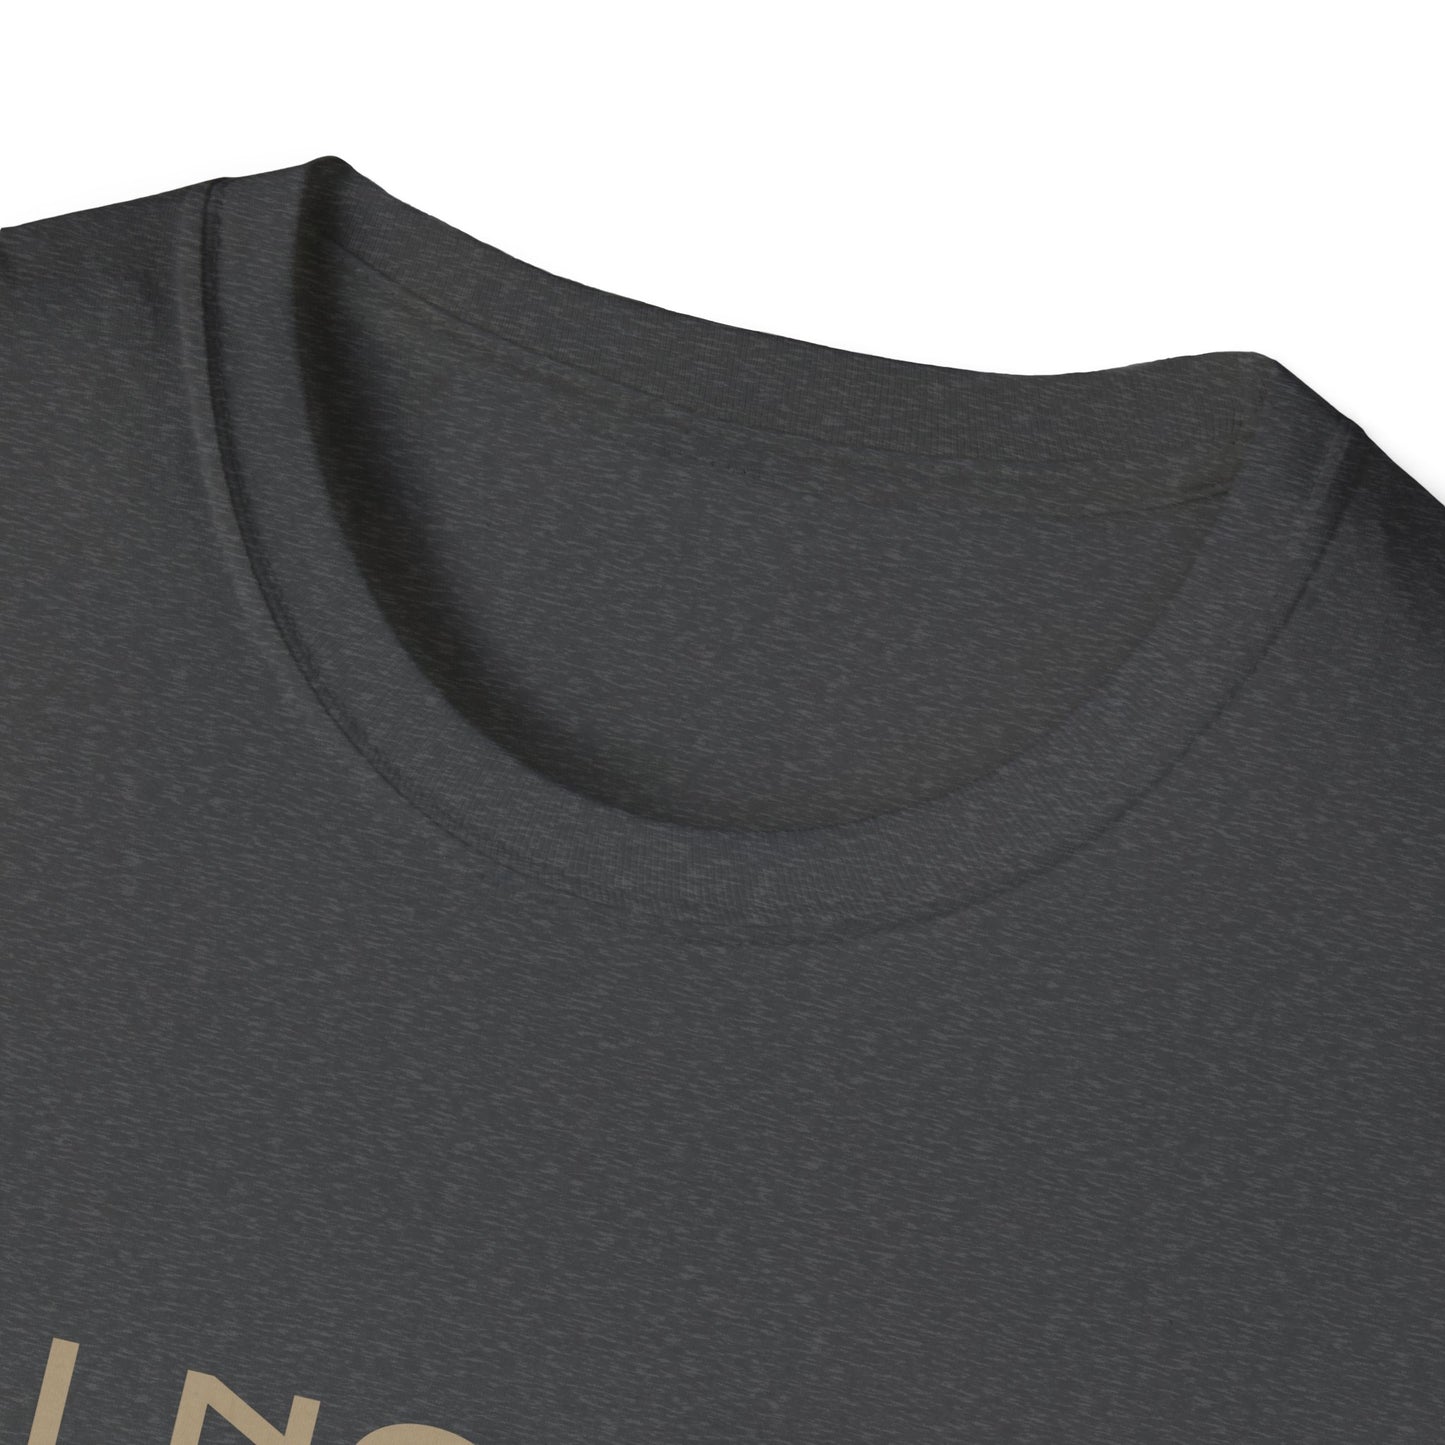 Lngvty Unisex Softstyle T-Shirt